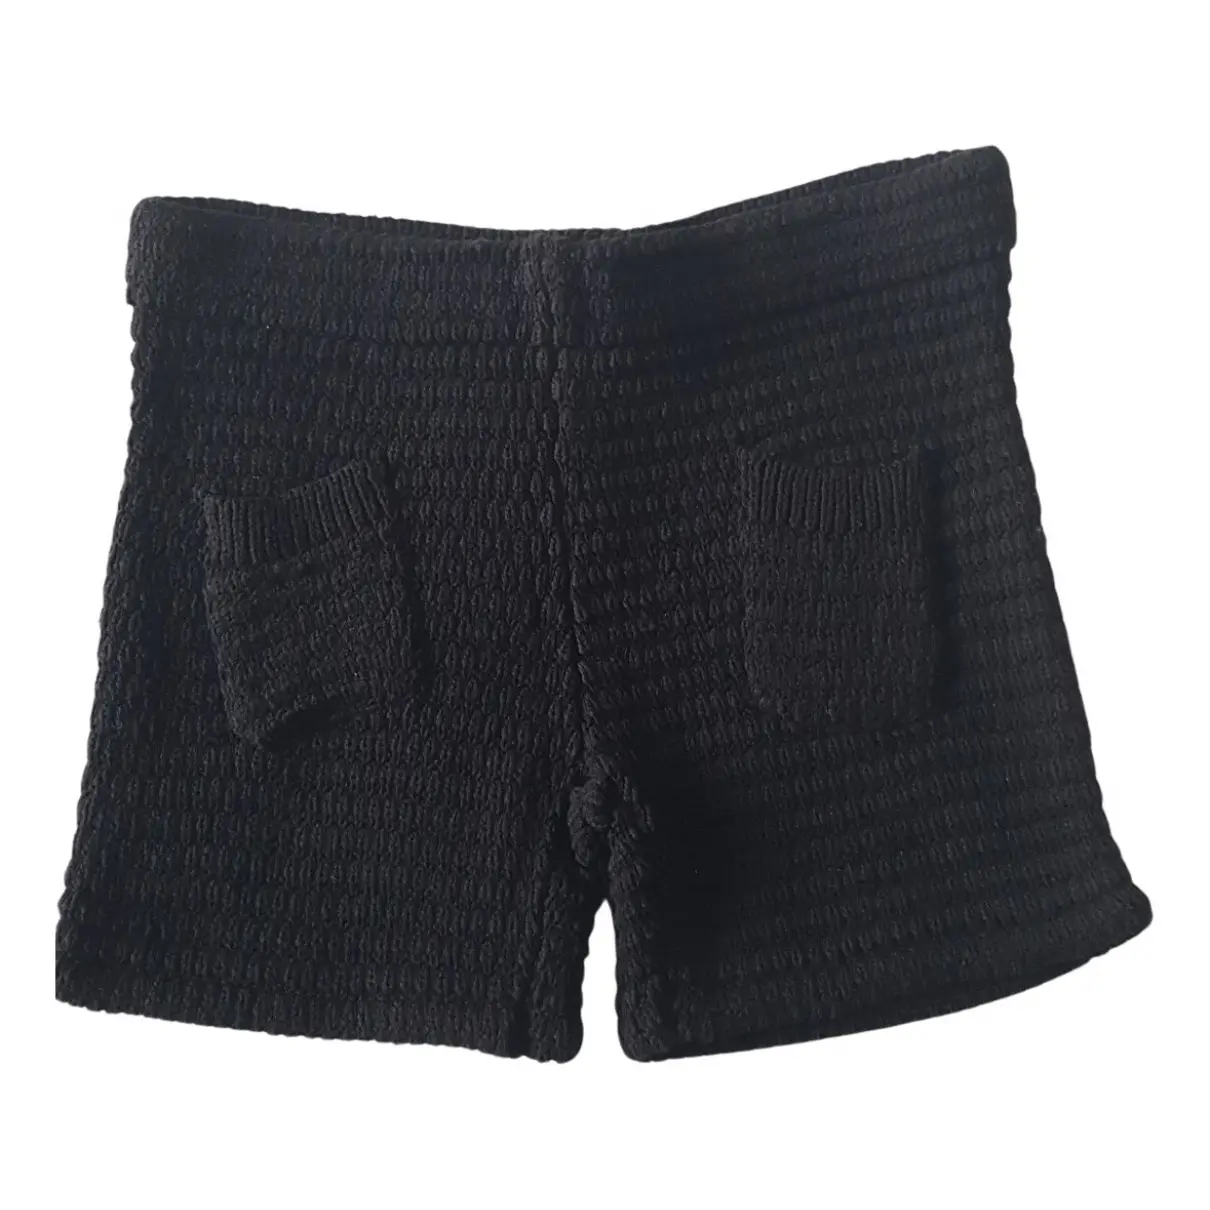 Black Cotton Shorts Bel Air